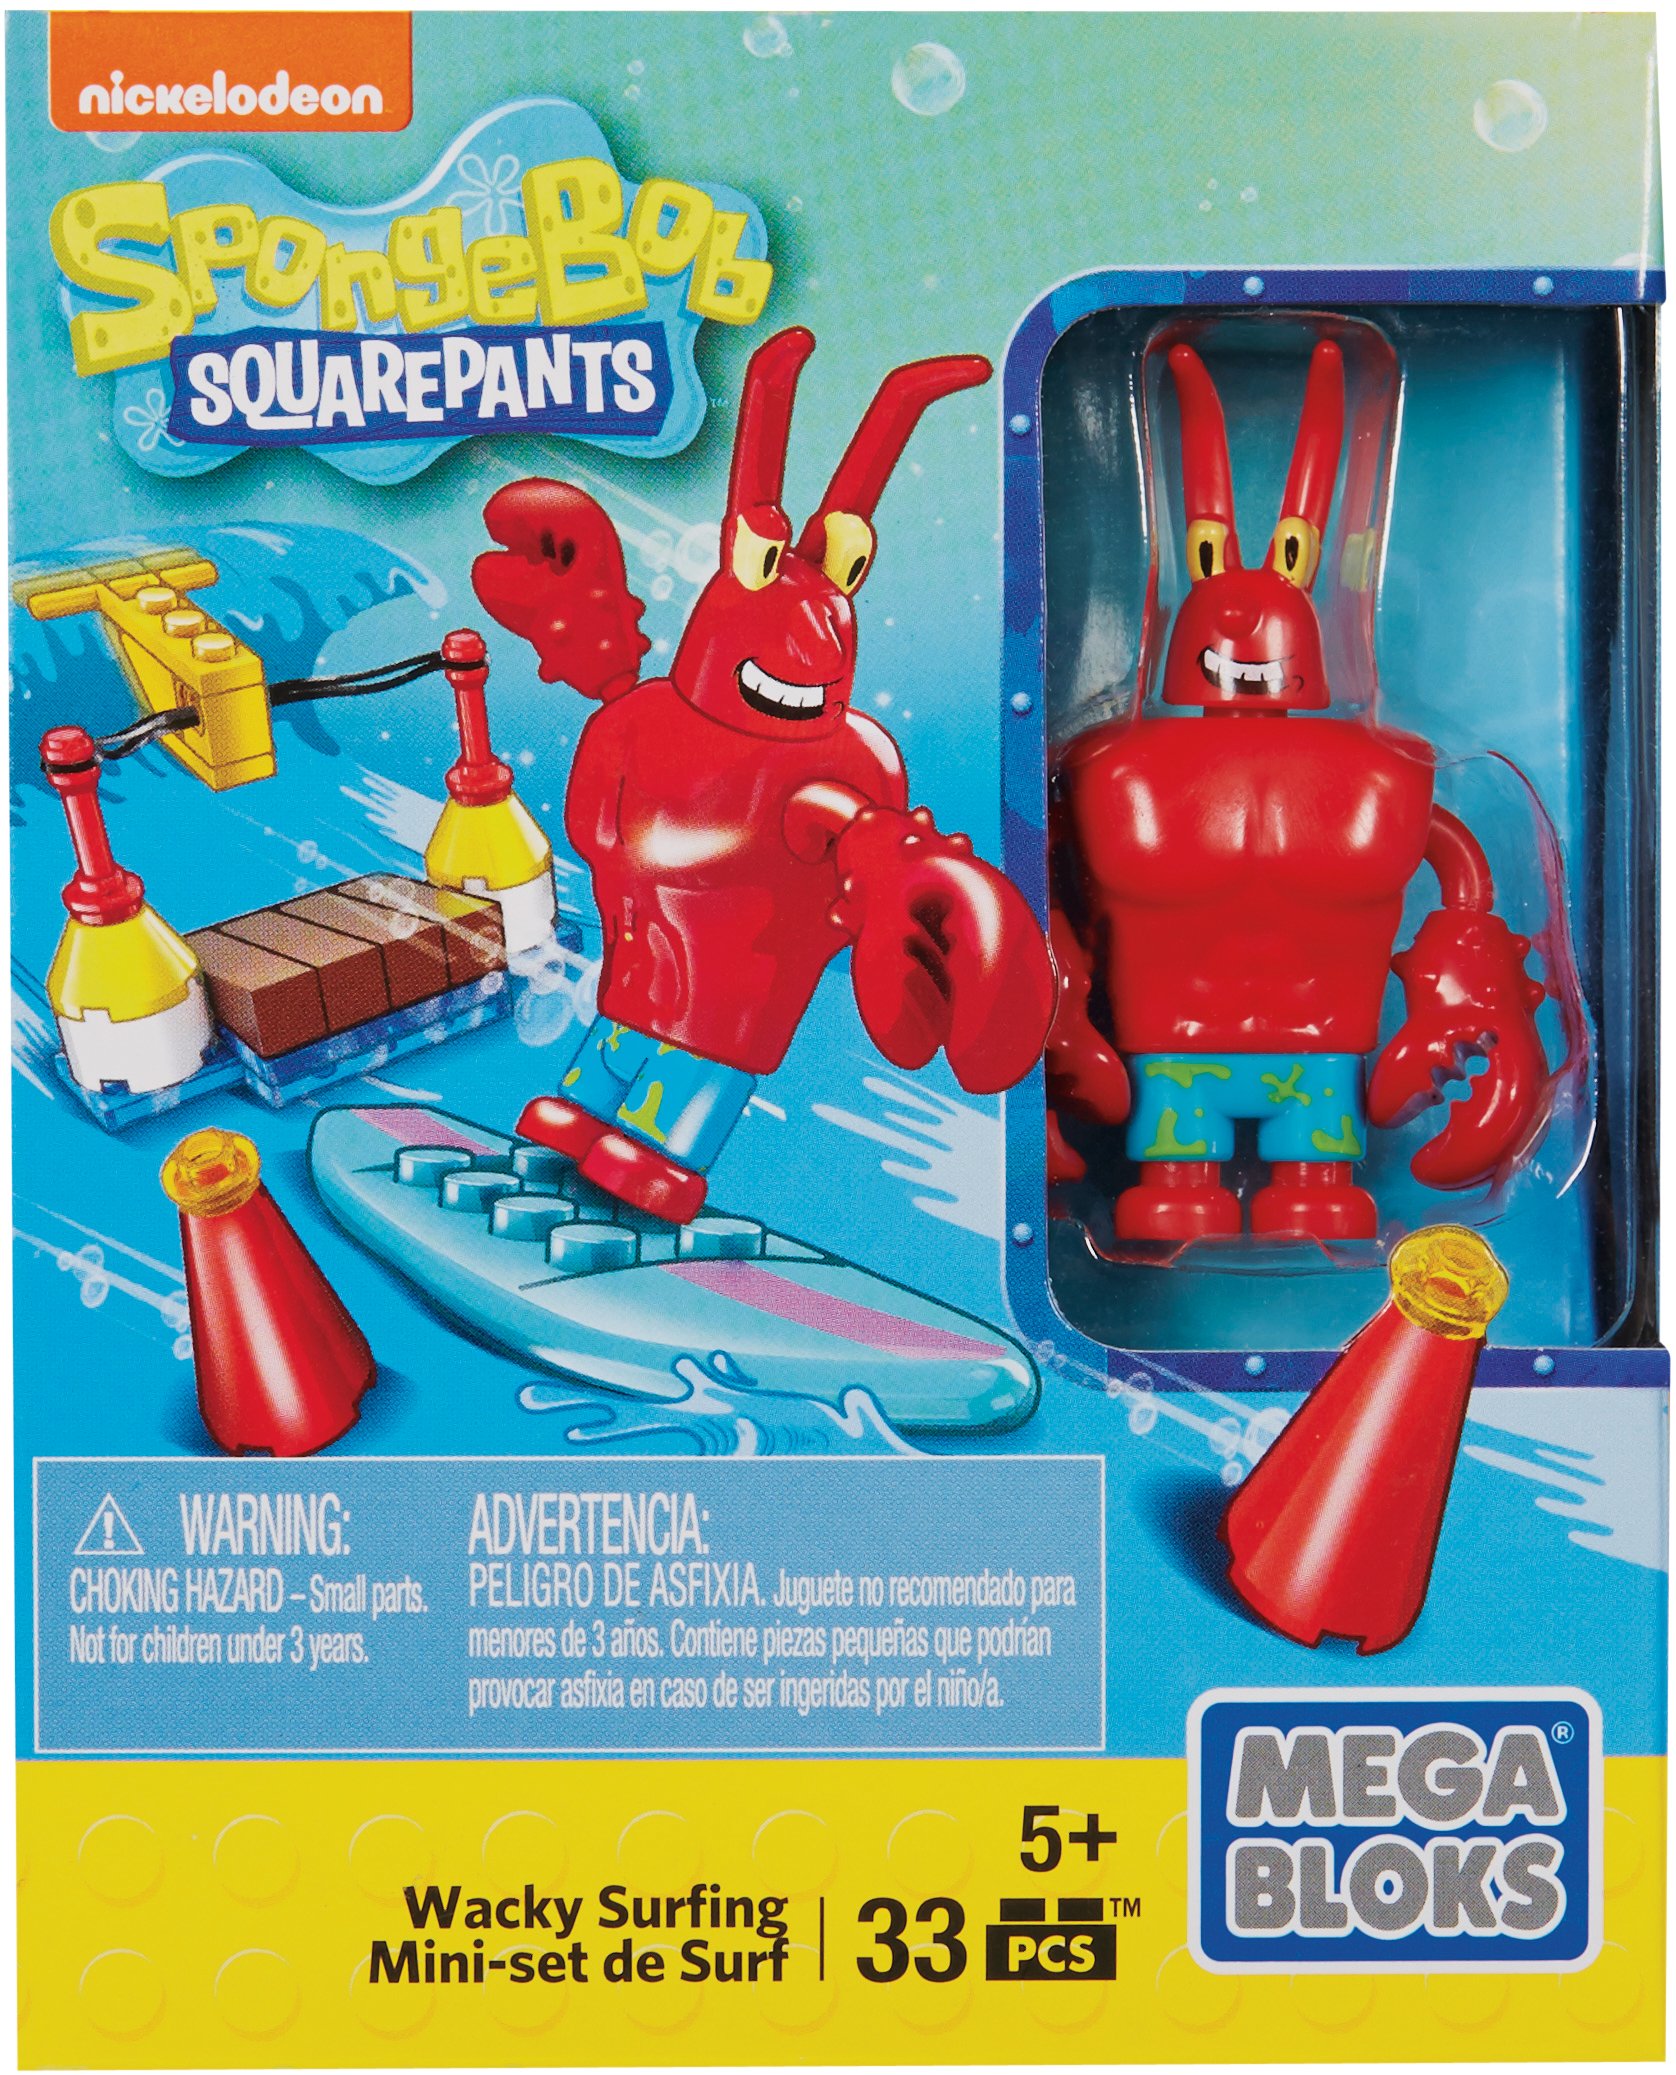 Mega Bloks Spongebob Squarepants Wacky Surfing cnf64 